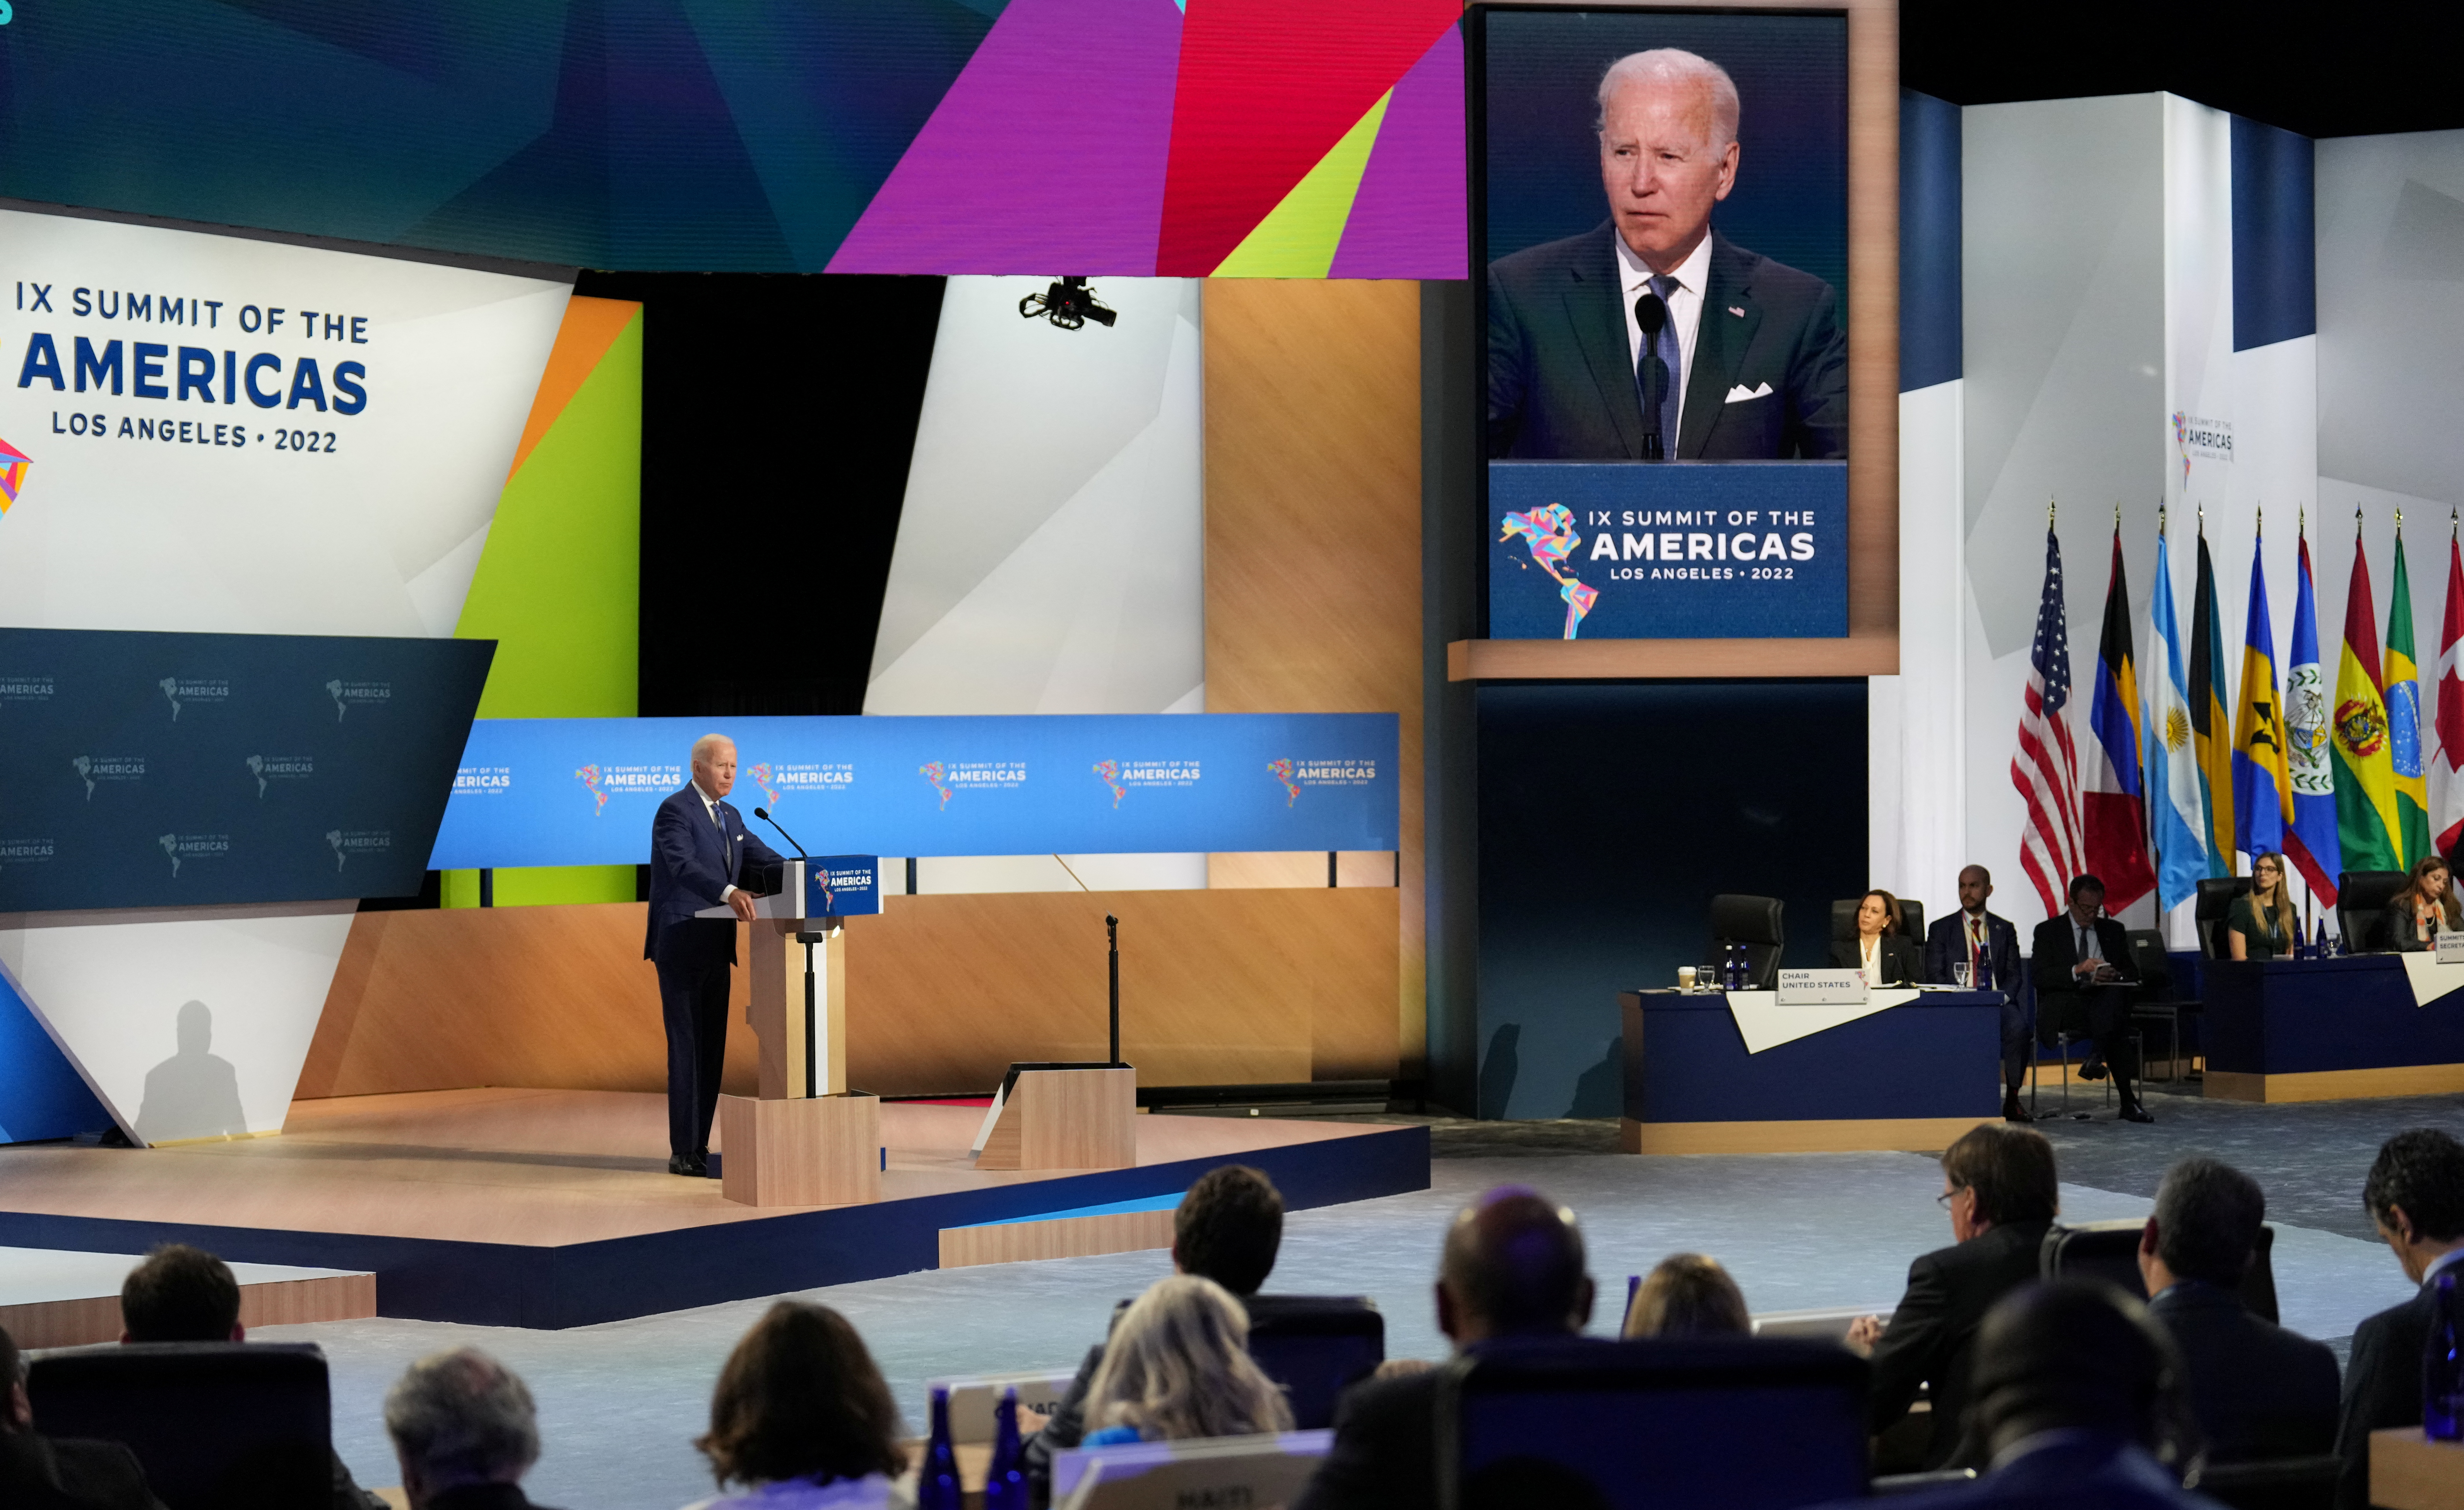 U.S. President Joe Biden speaks during the opening plenary session at the Ninth Summit of the Americas in Los Angeles, California, U.S., June 9, 2022. REUTERS/Lauren Justice